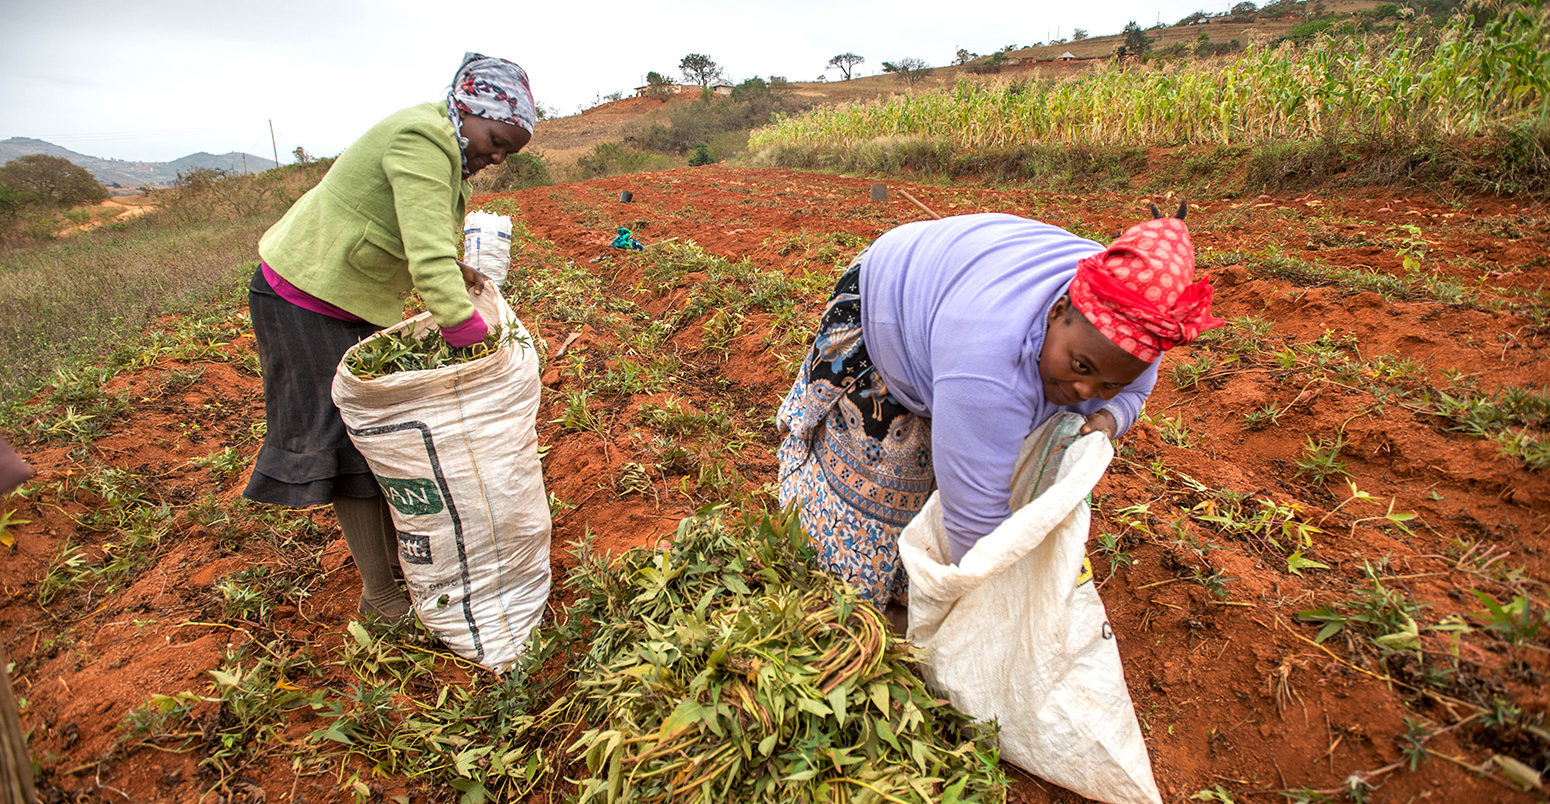 Harvesting yam plants in the Hhohho region of Swaziland, Africa. Credit: Edwin Remsberg / Alamy Stock Photo. FDHF9B